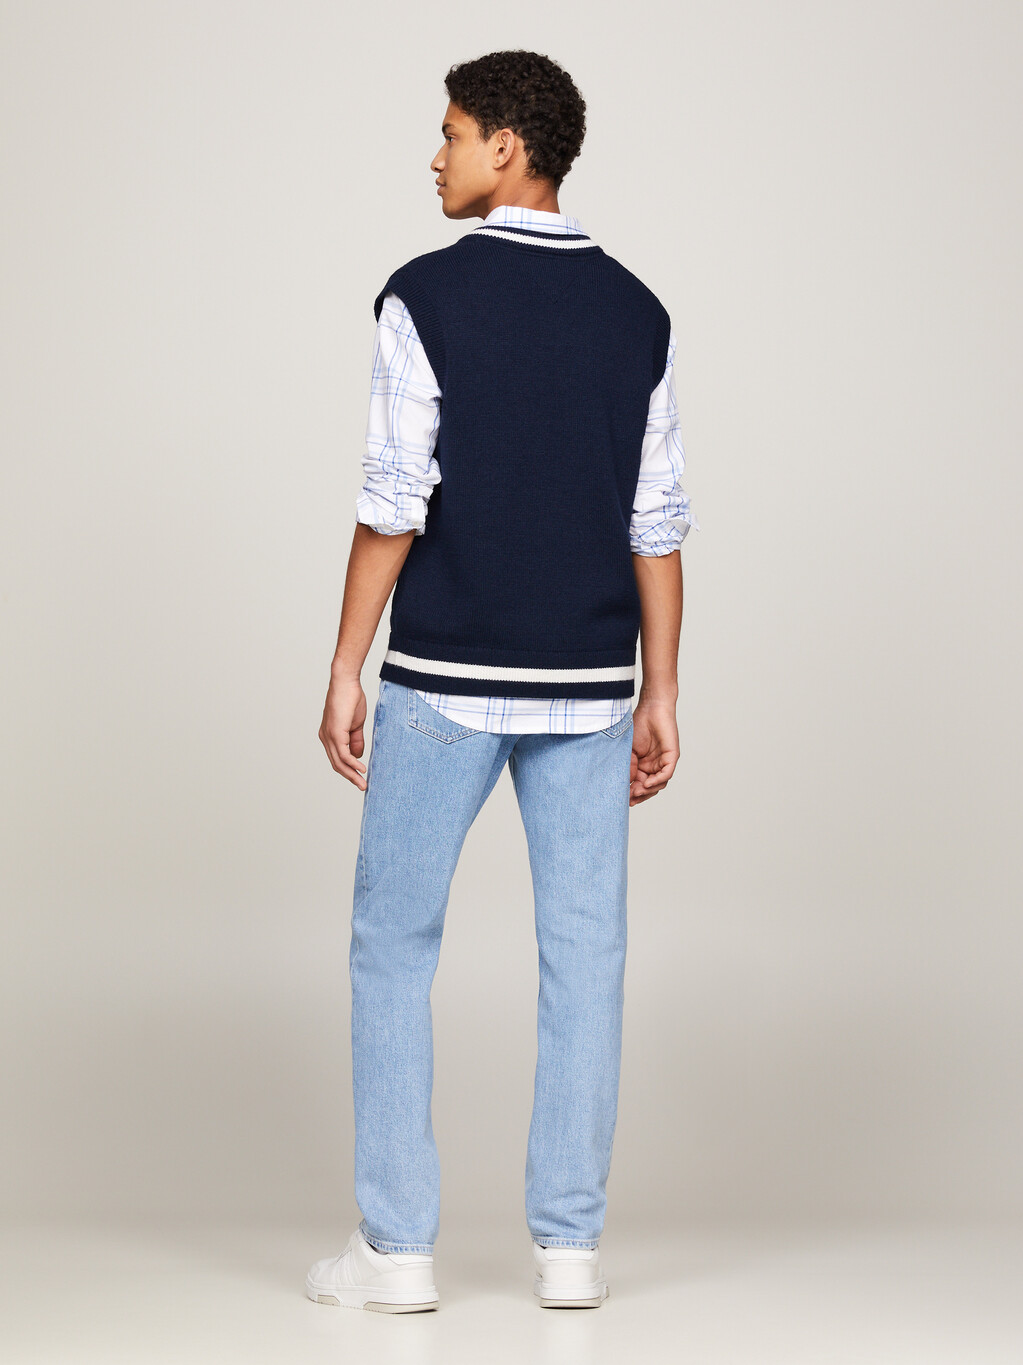 Essential Tipped Sweater Vest, Dark Night Navy, hi-res